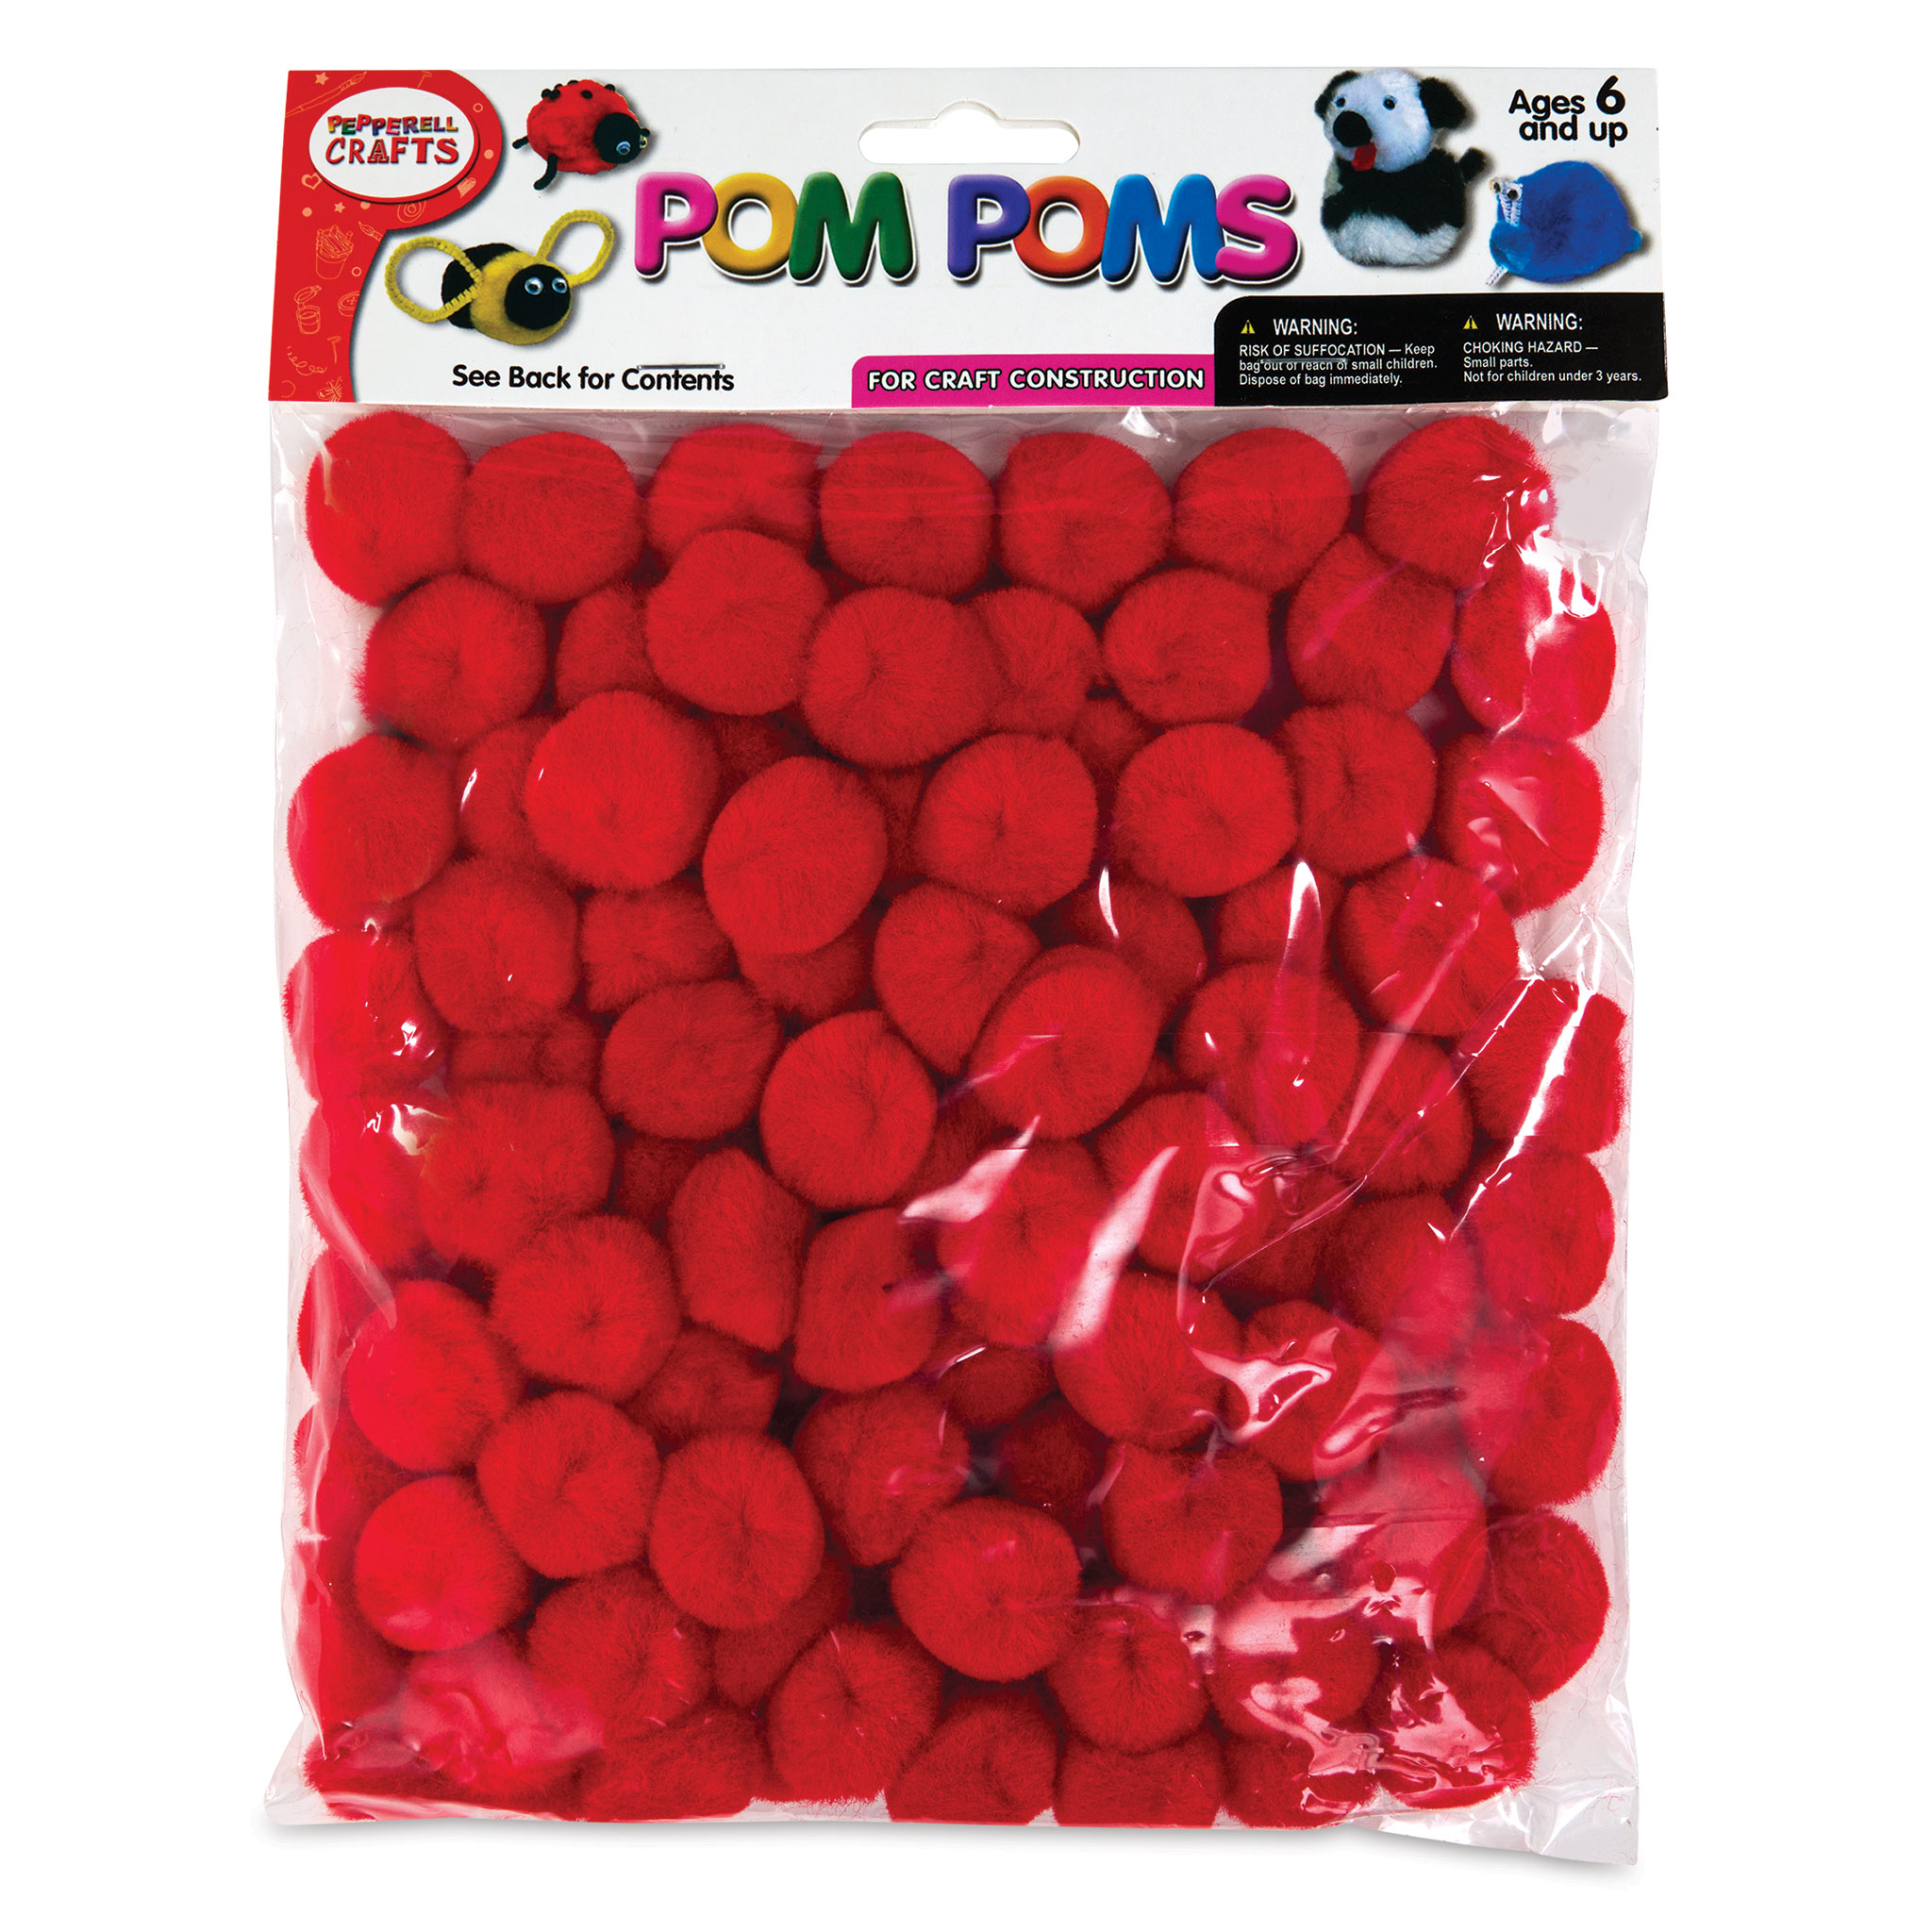 Pepperell Craft Pom Poms - Pkg of 100, 1 inch, Red